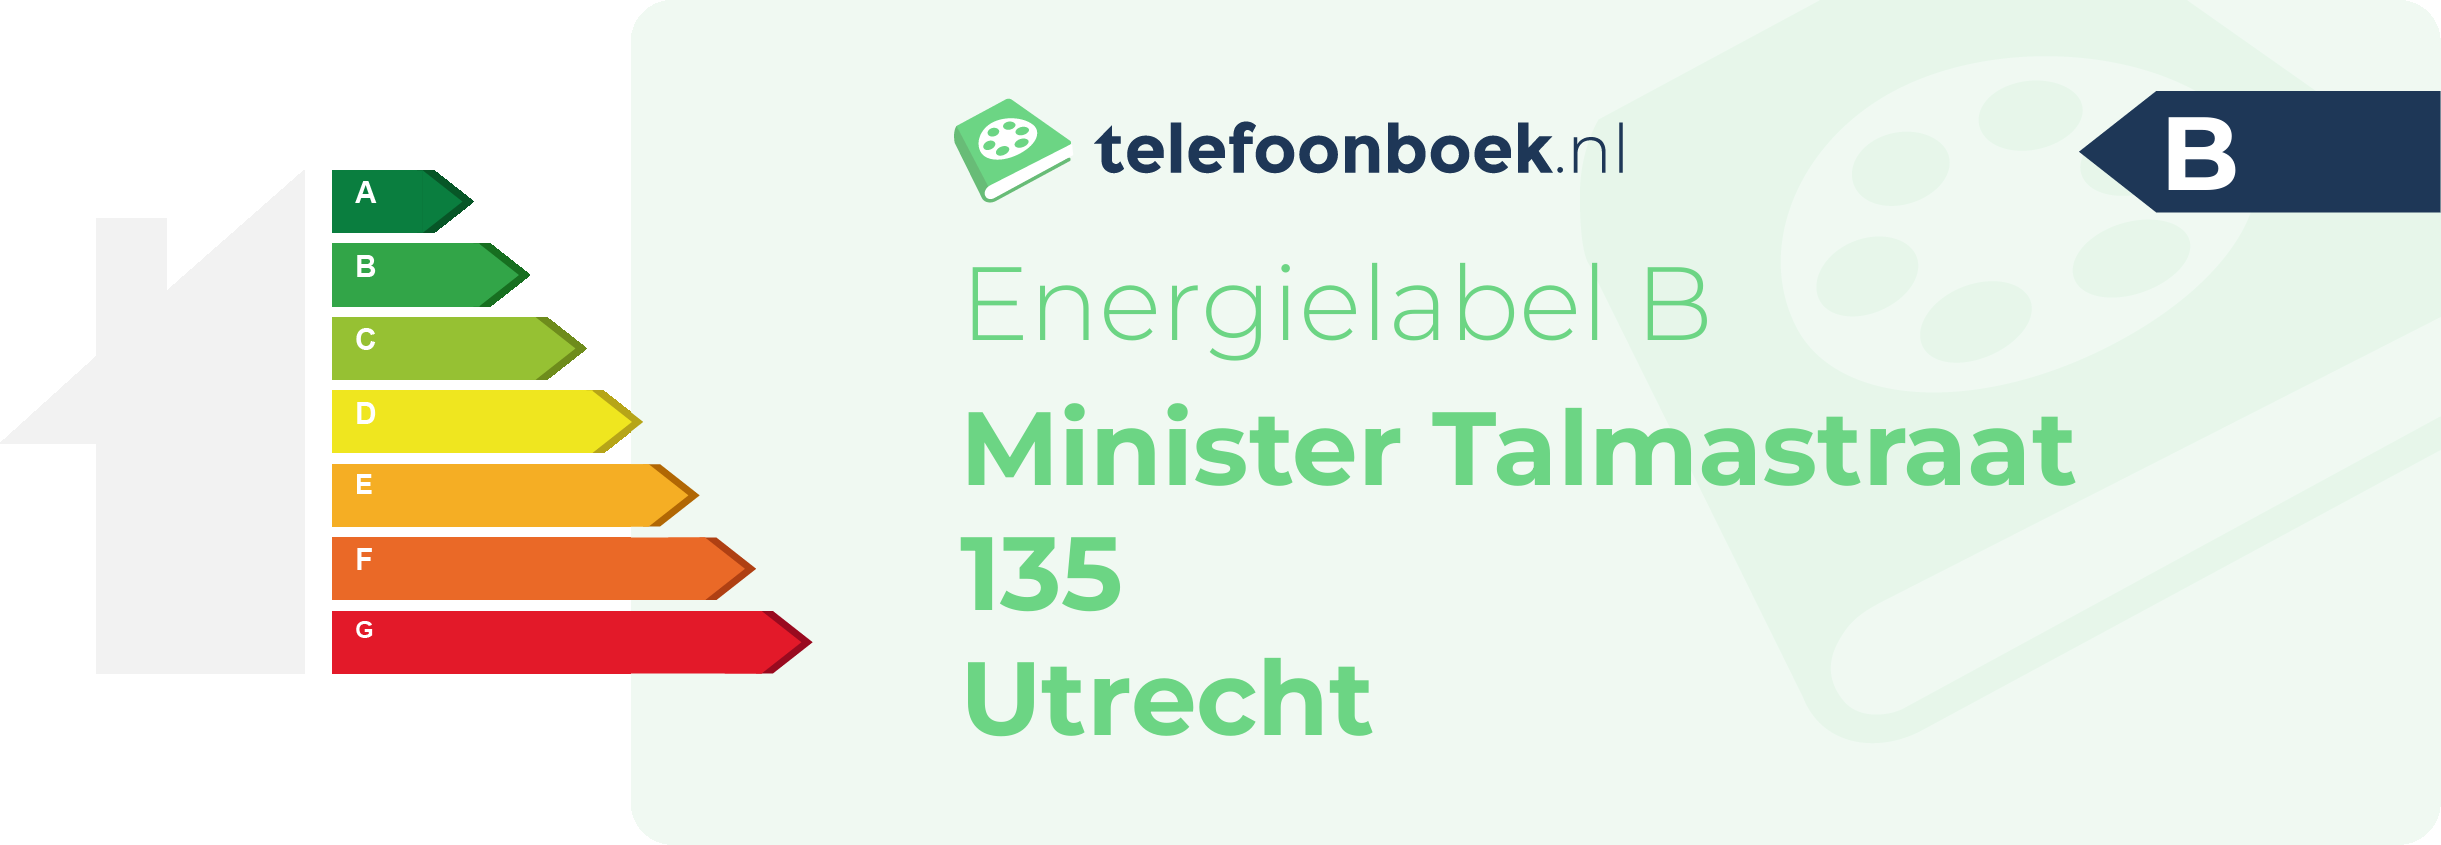 Energielabel Minister Talmastraat 135 Utrecht